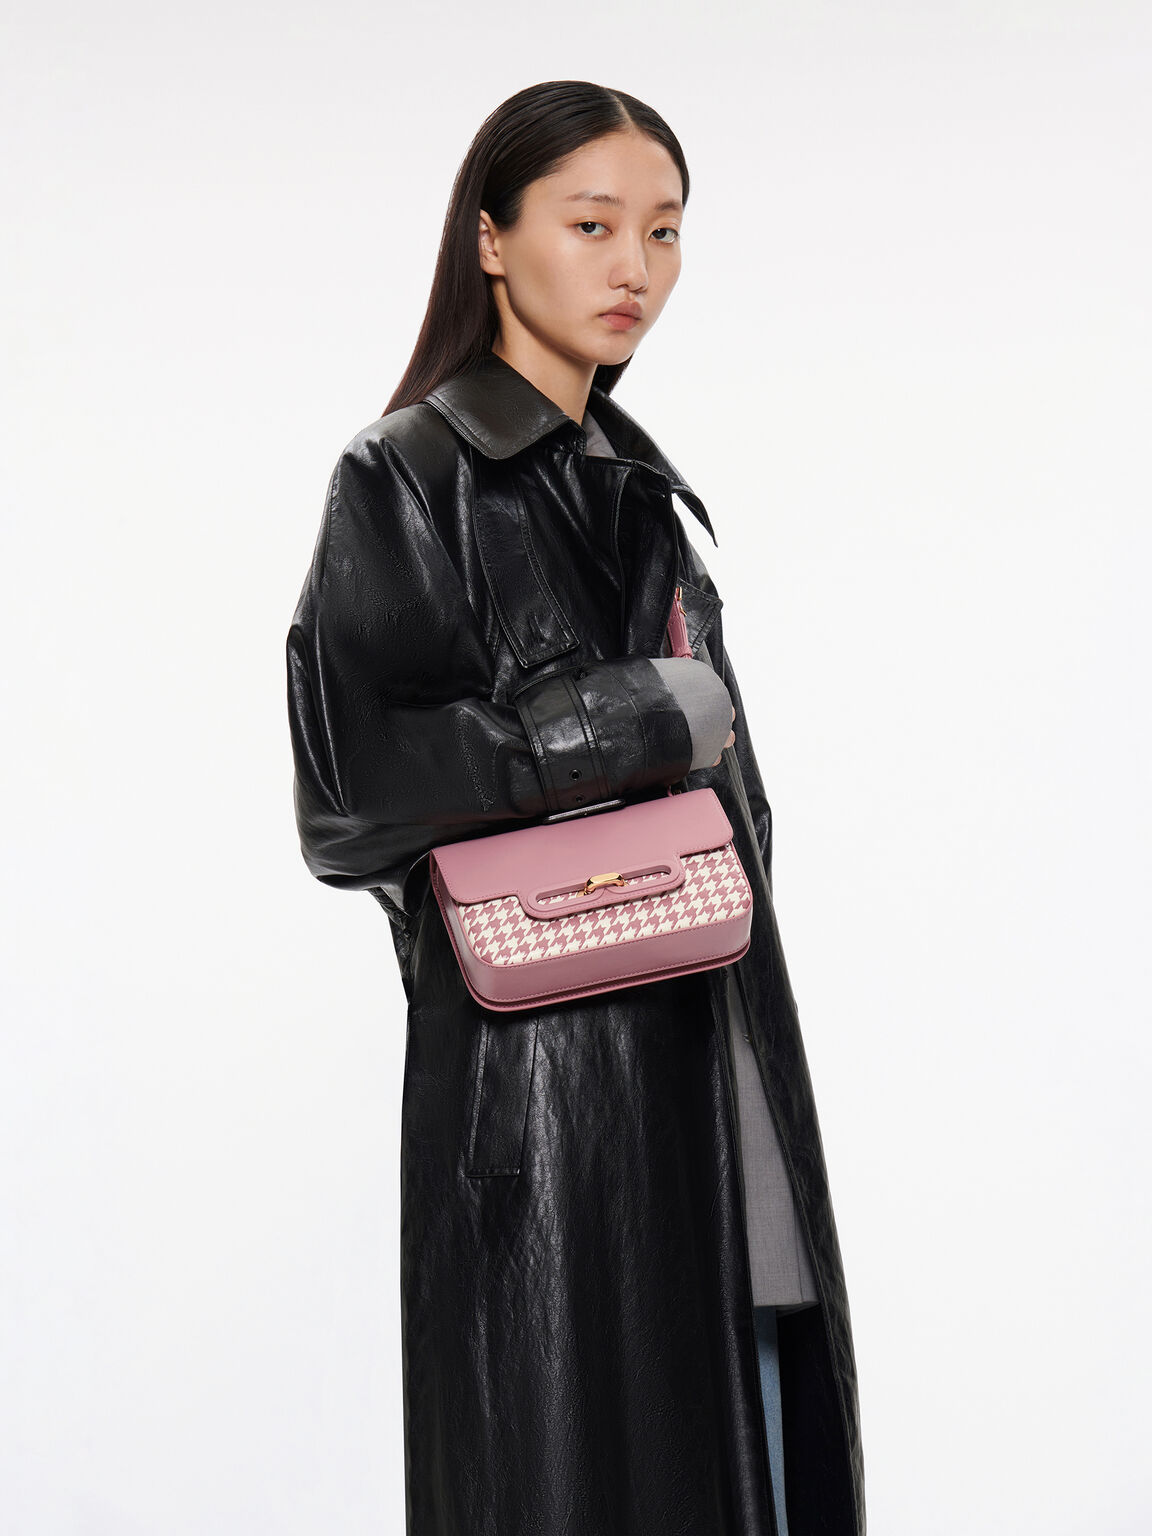 PEDRO Studio Kate Leather Envelope Bag, Blush, hi-res